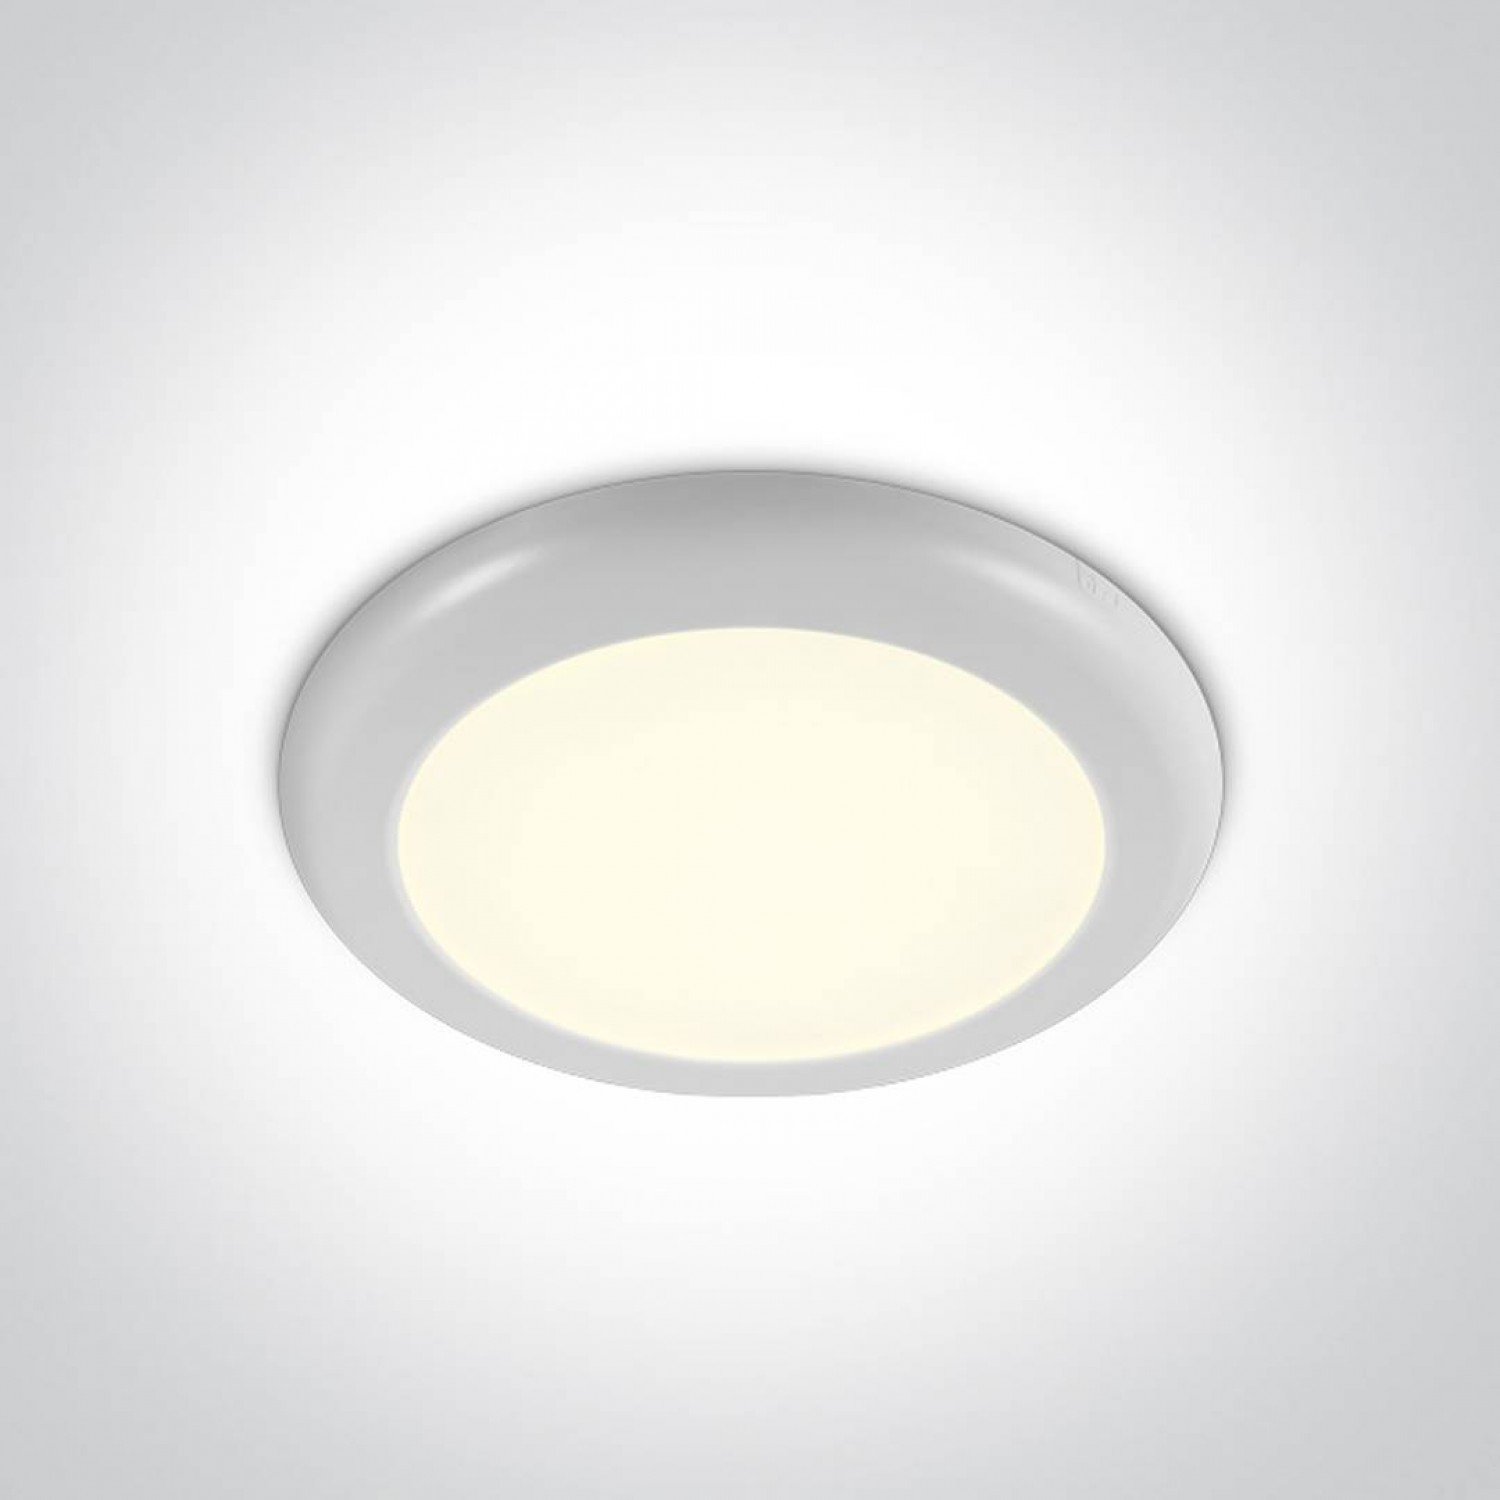 alt_image Точечный светильник ONE Light Surface/Recessed Panels Adjustable Cut Out Hole 62116F/W/C